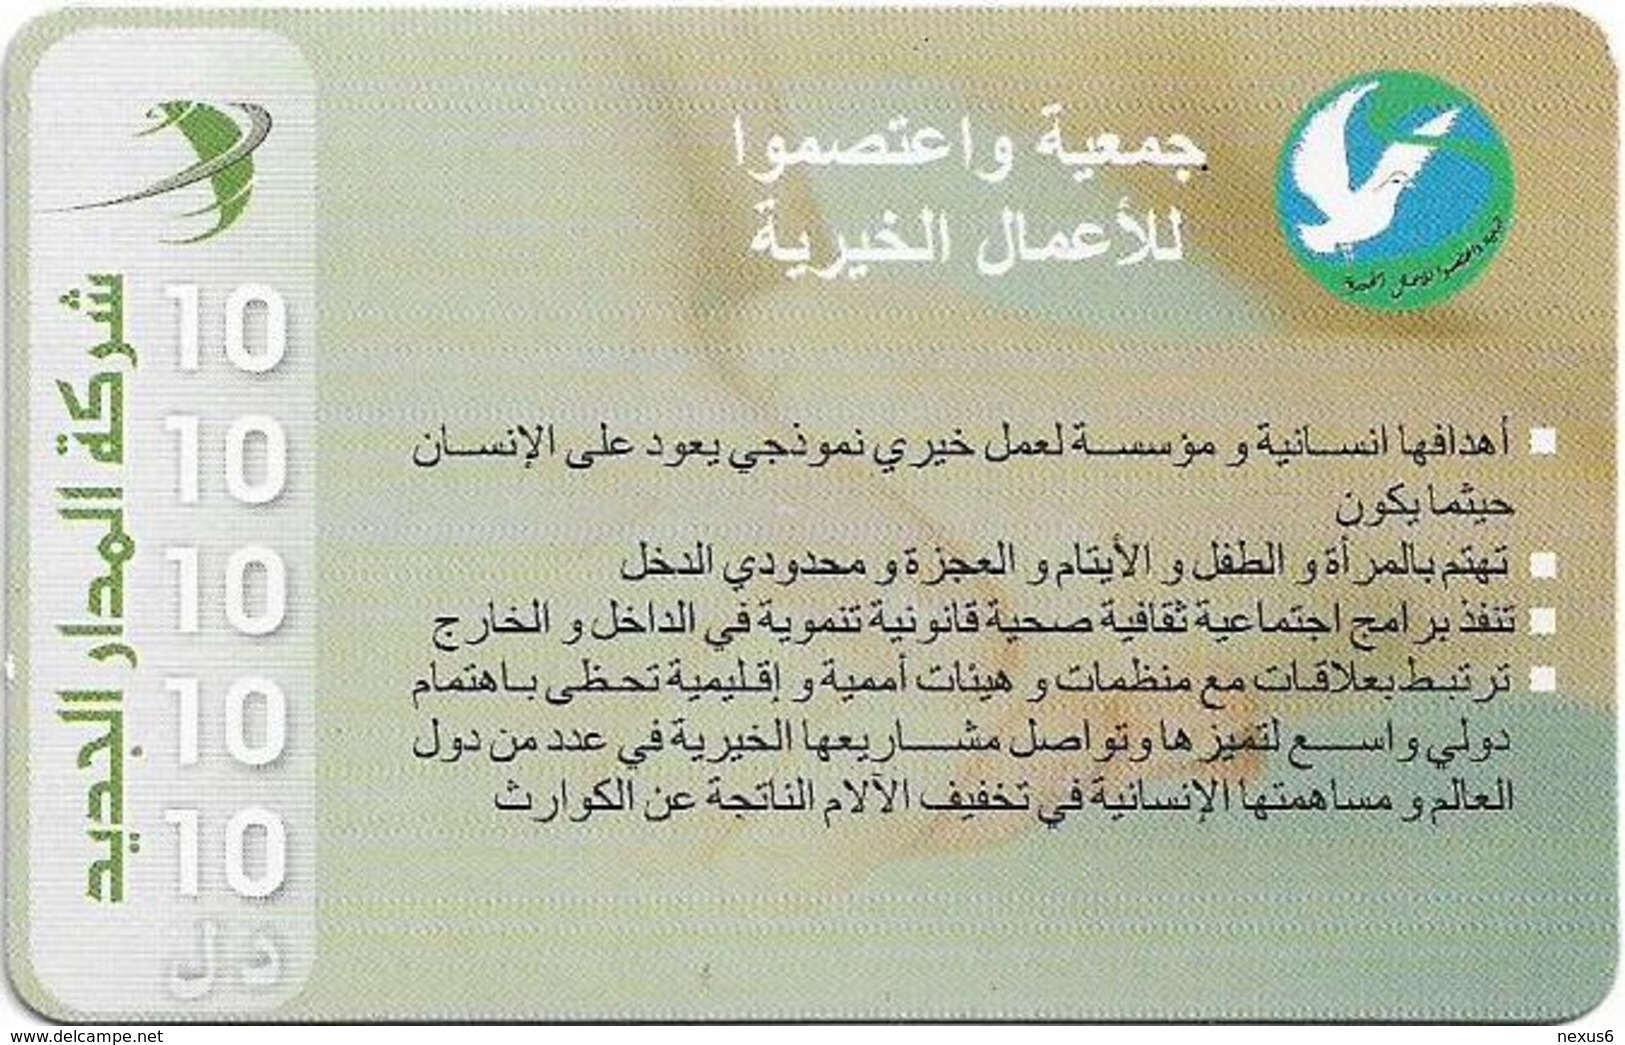 Libya - Almadar - Message In Arabic, 10LD Prepaid Card, Used - Libye